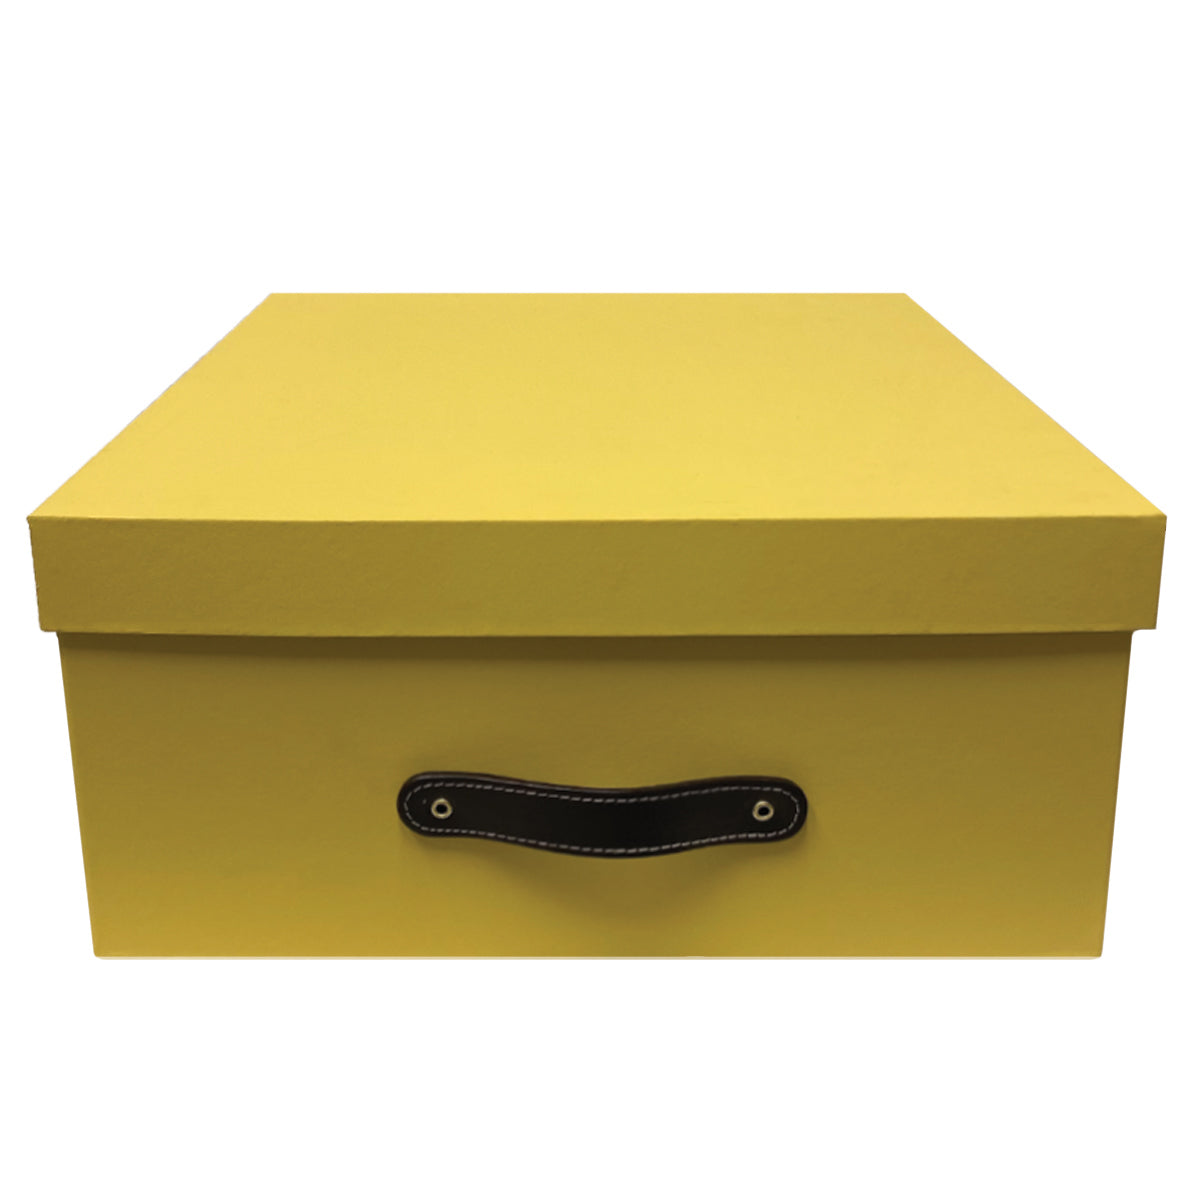 Caja Decorativa Organizadora Negro Soft Touch 2 piezas – Luxbox Design